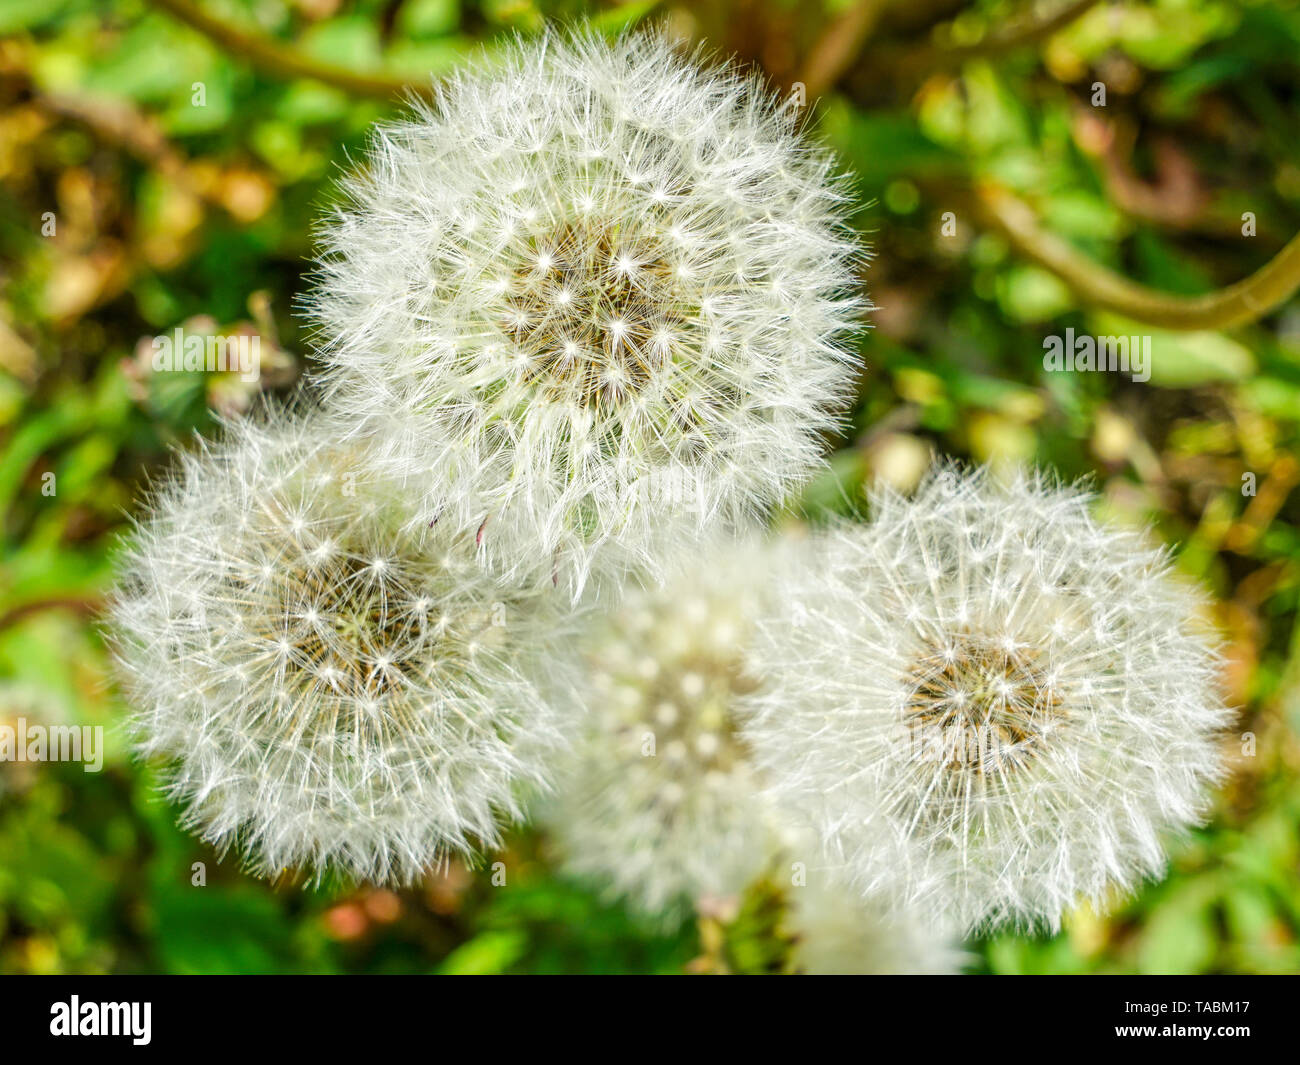 Dandelion, Taraxacum erythrospermum, closeup with natural blurred background Stock Photo